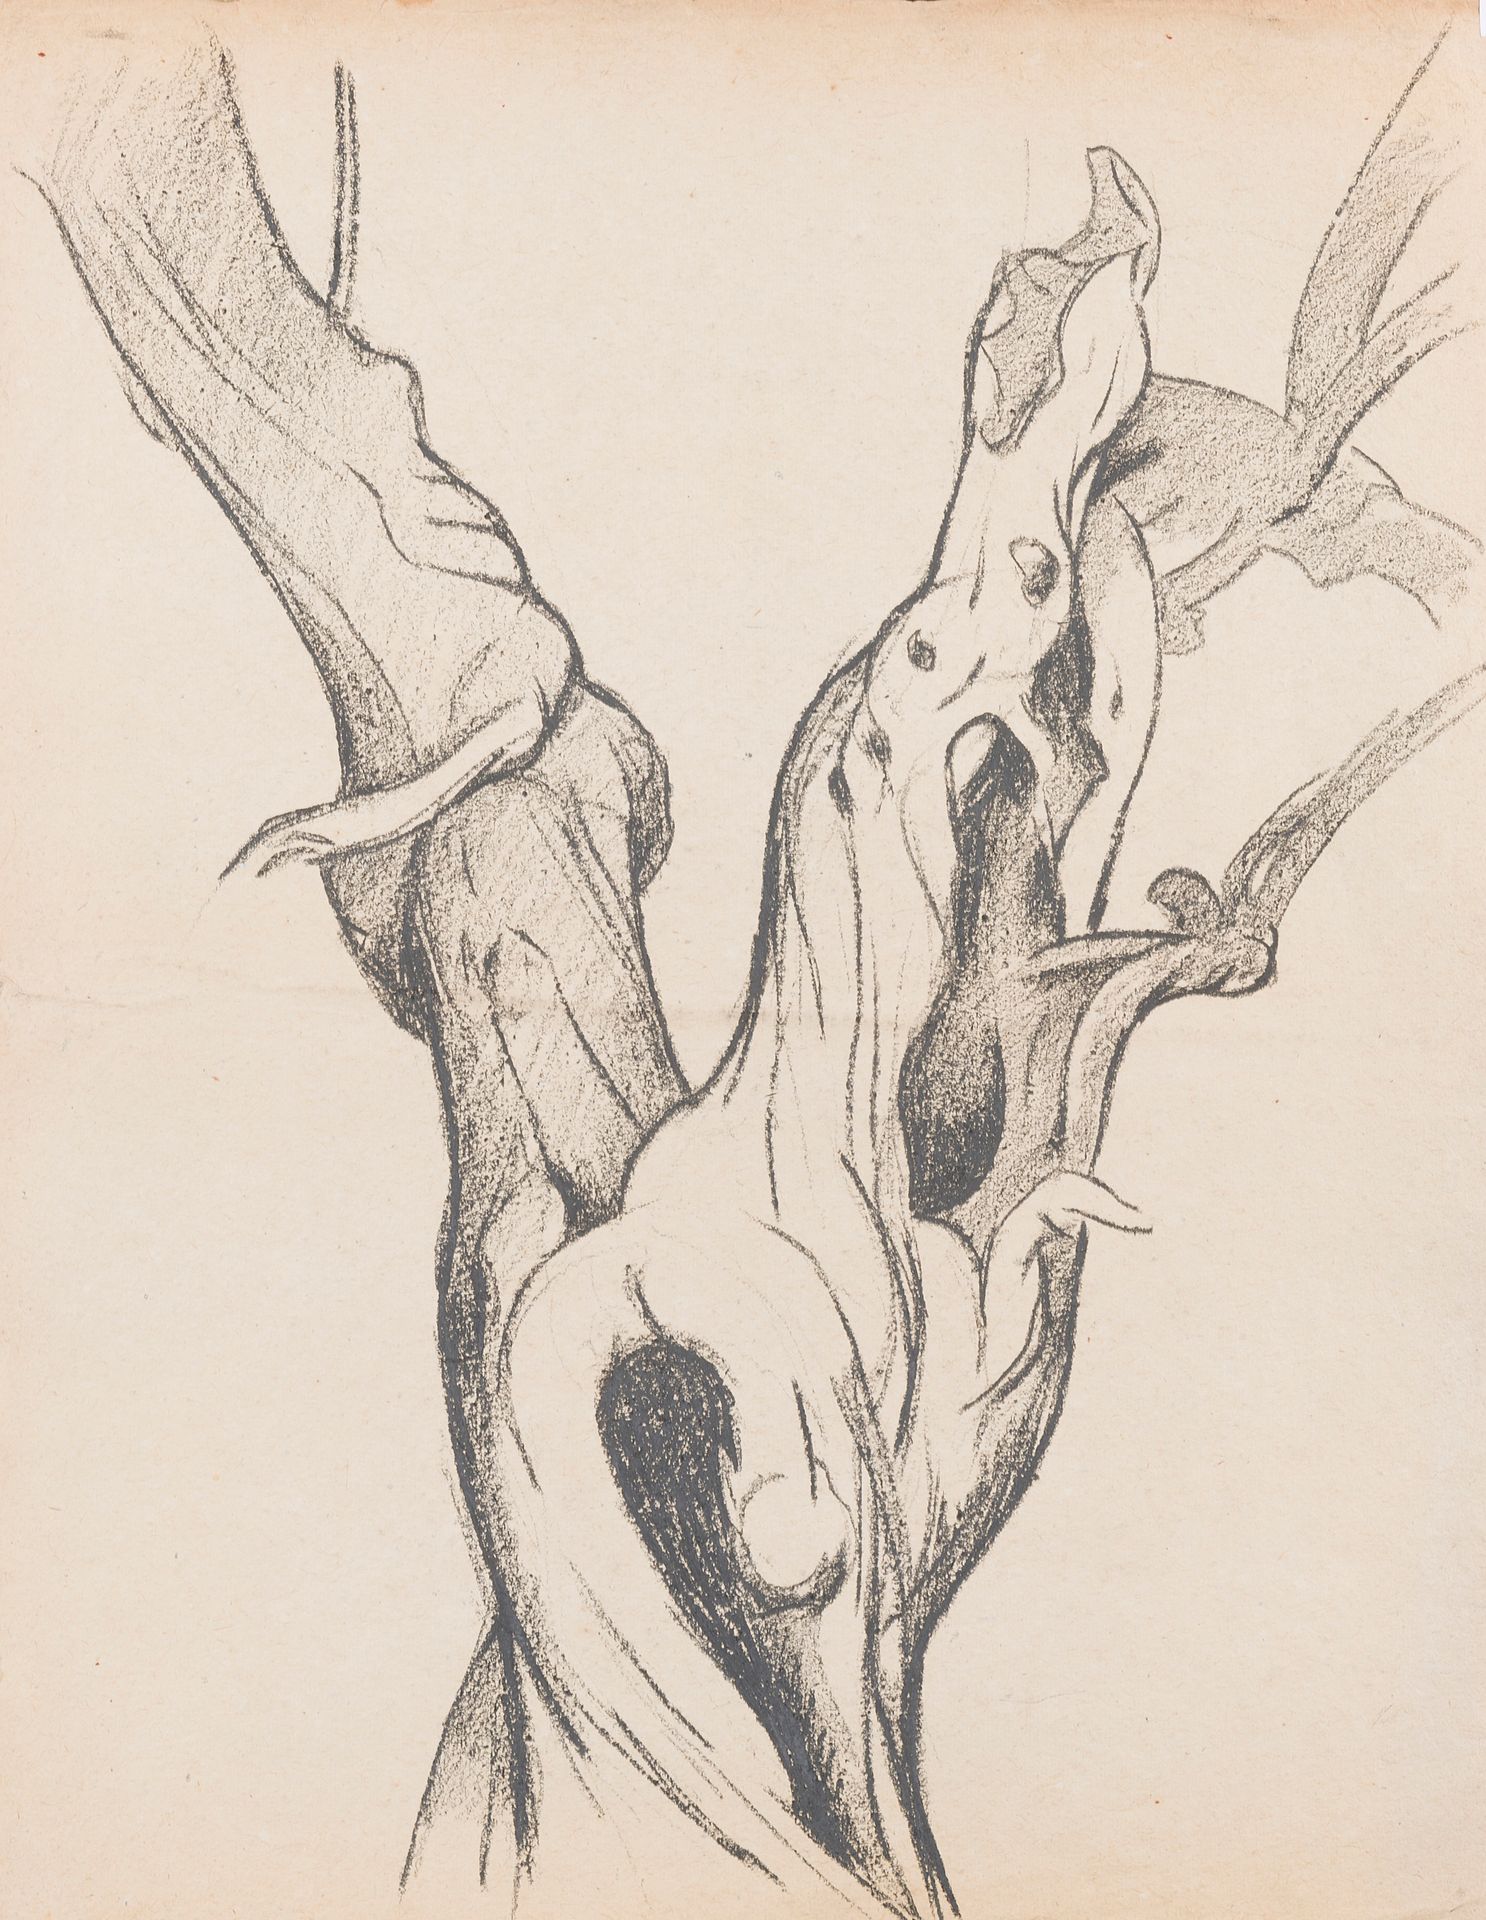 Null Charles PICART LE DOUX (1881-1959)
Albero morto, 1935
Carboncino
57 x 44 cm